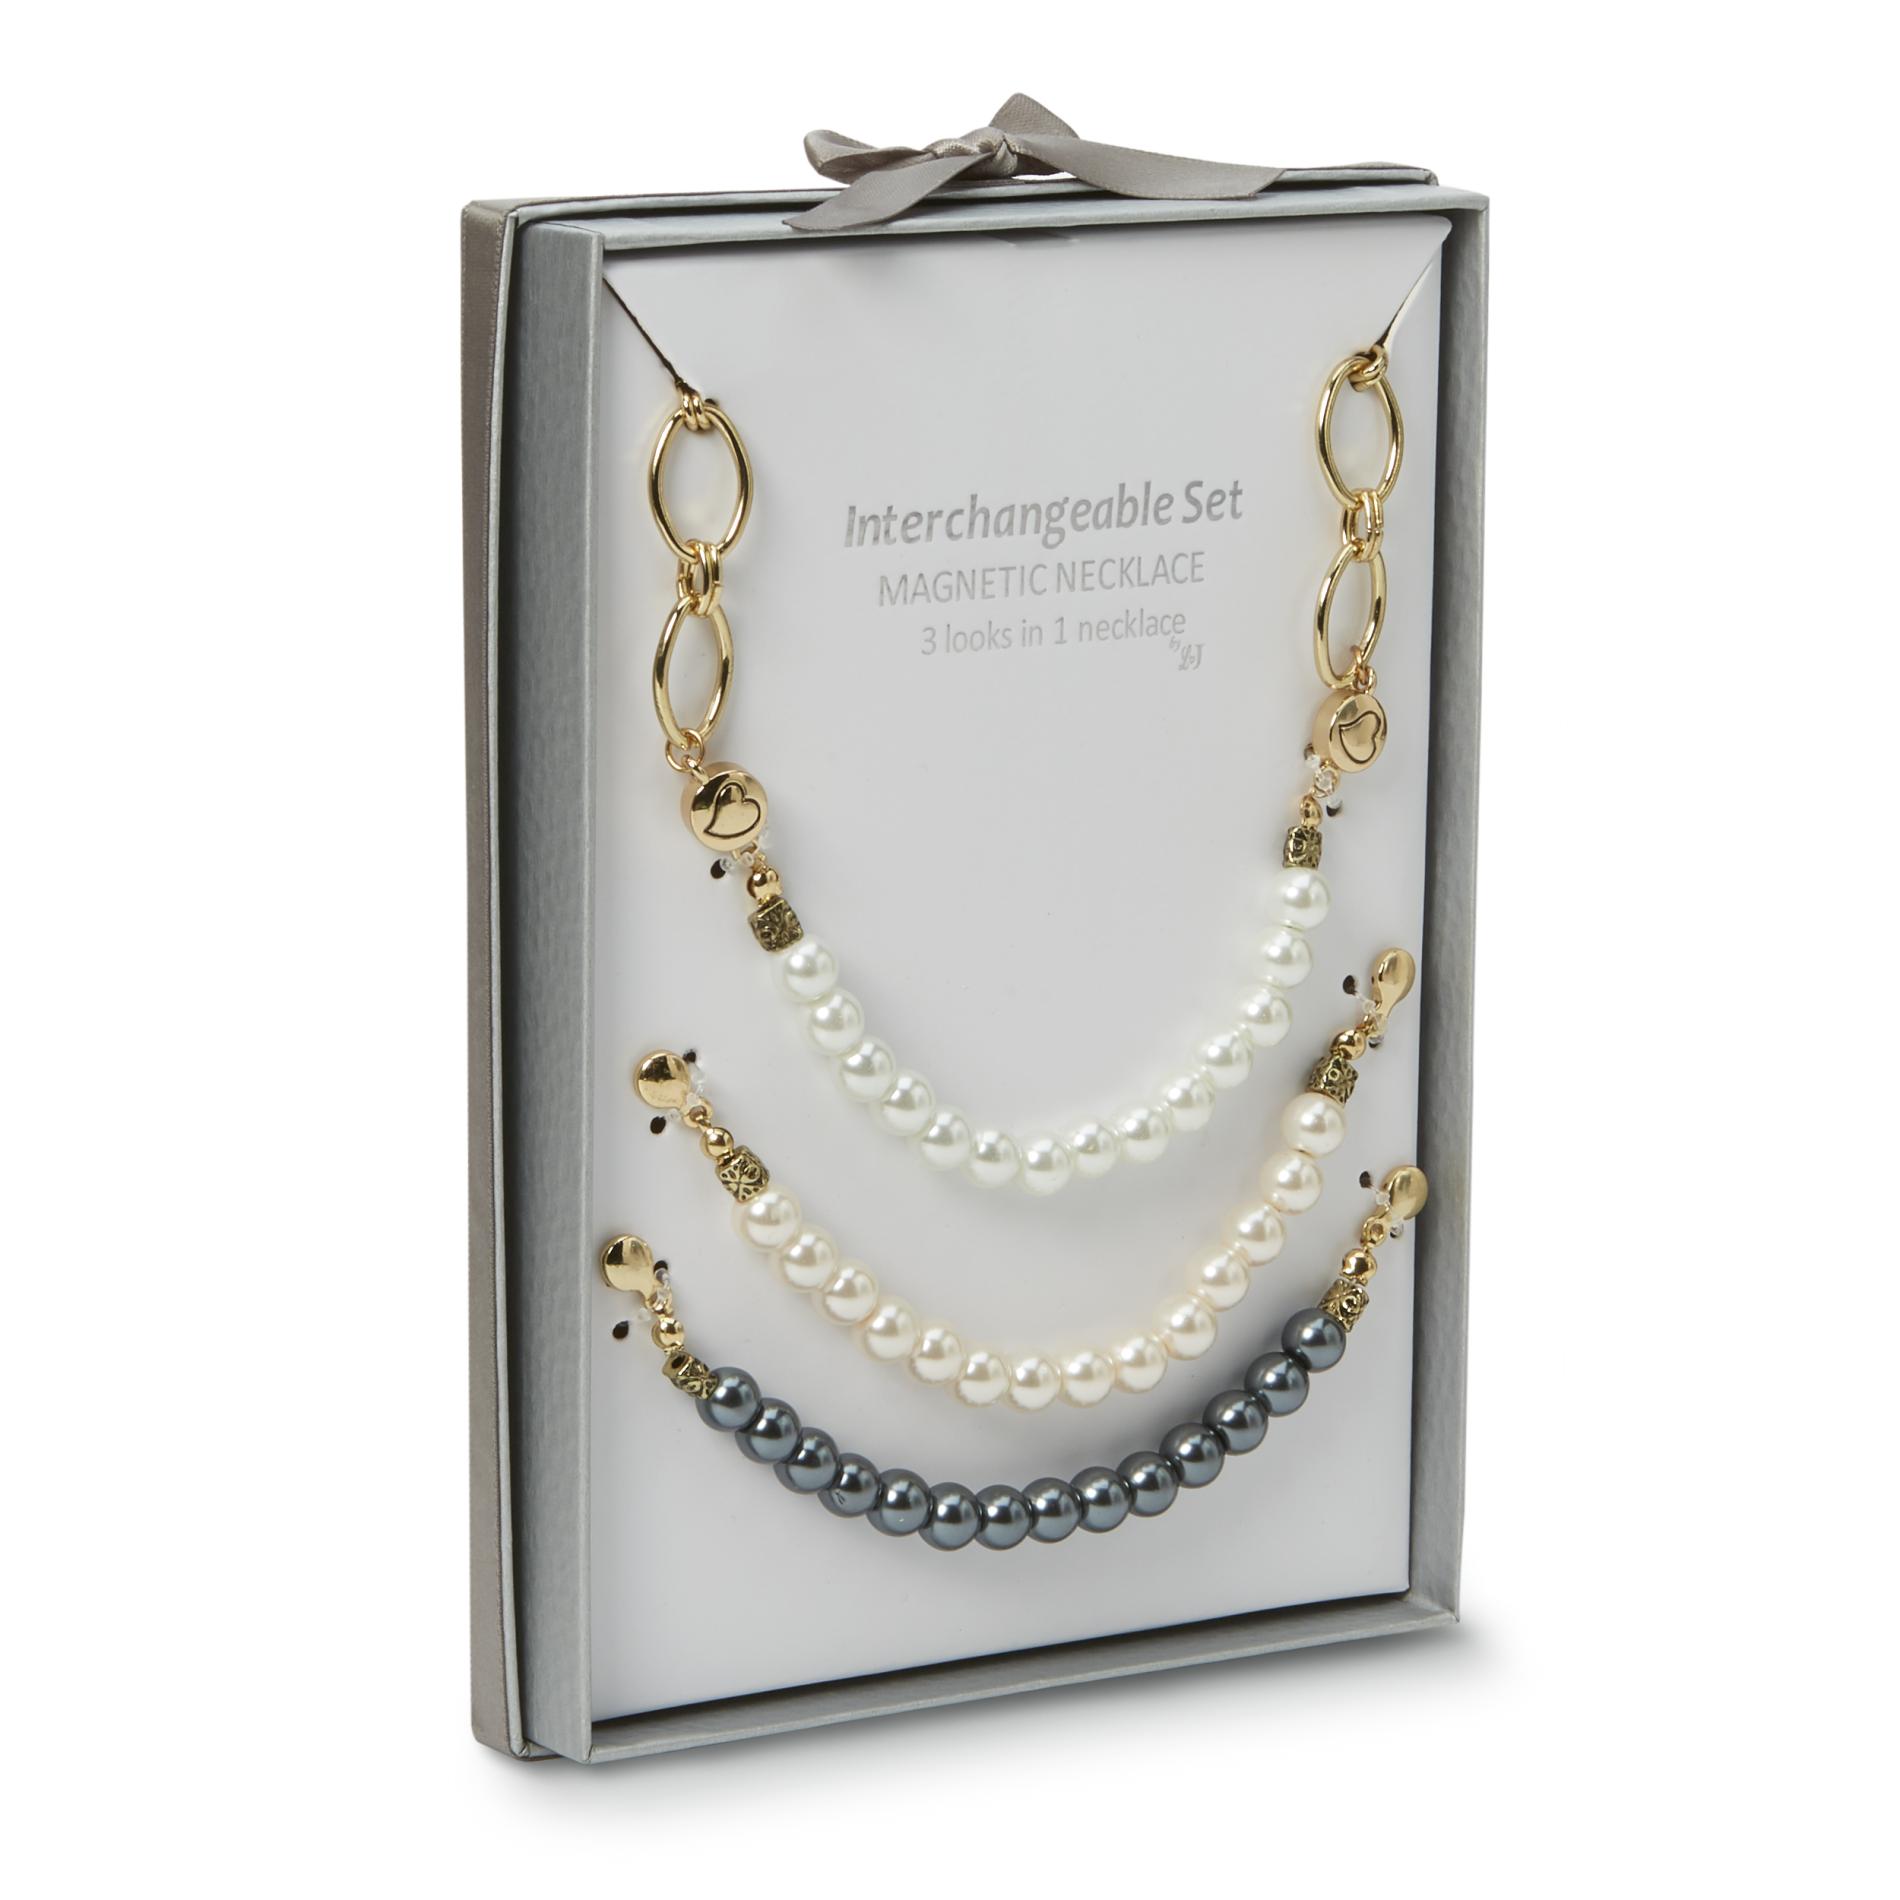 Studio S Women's Goldtone Magnetic Necklace Set